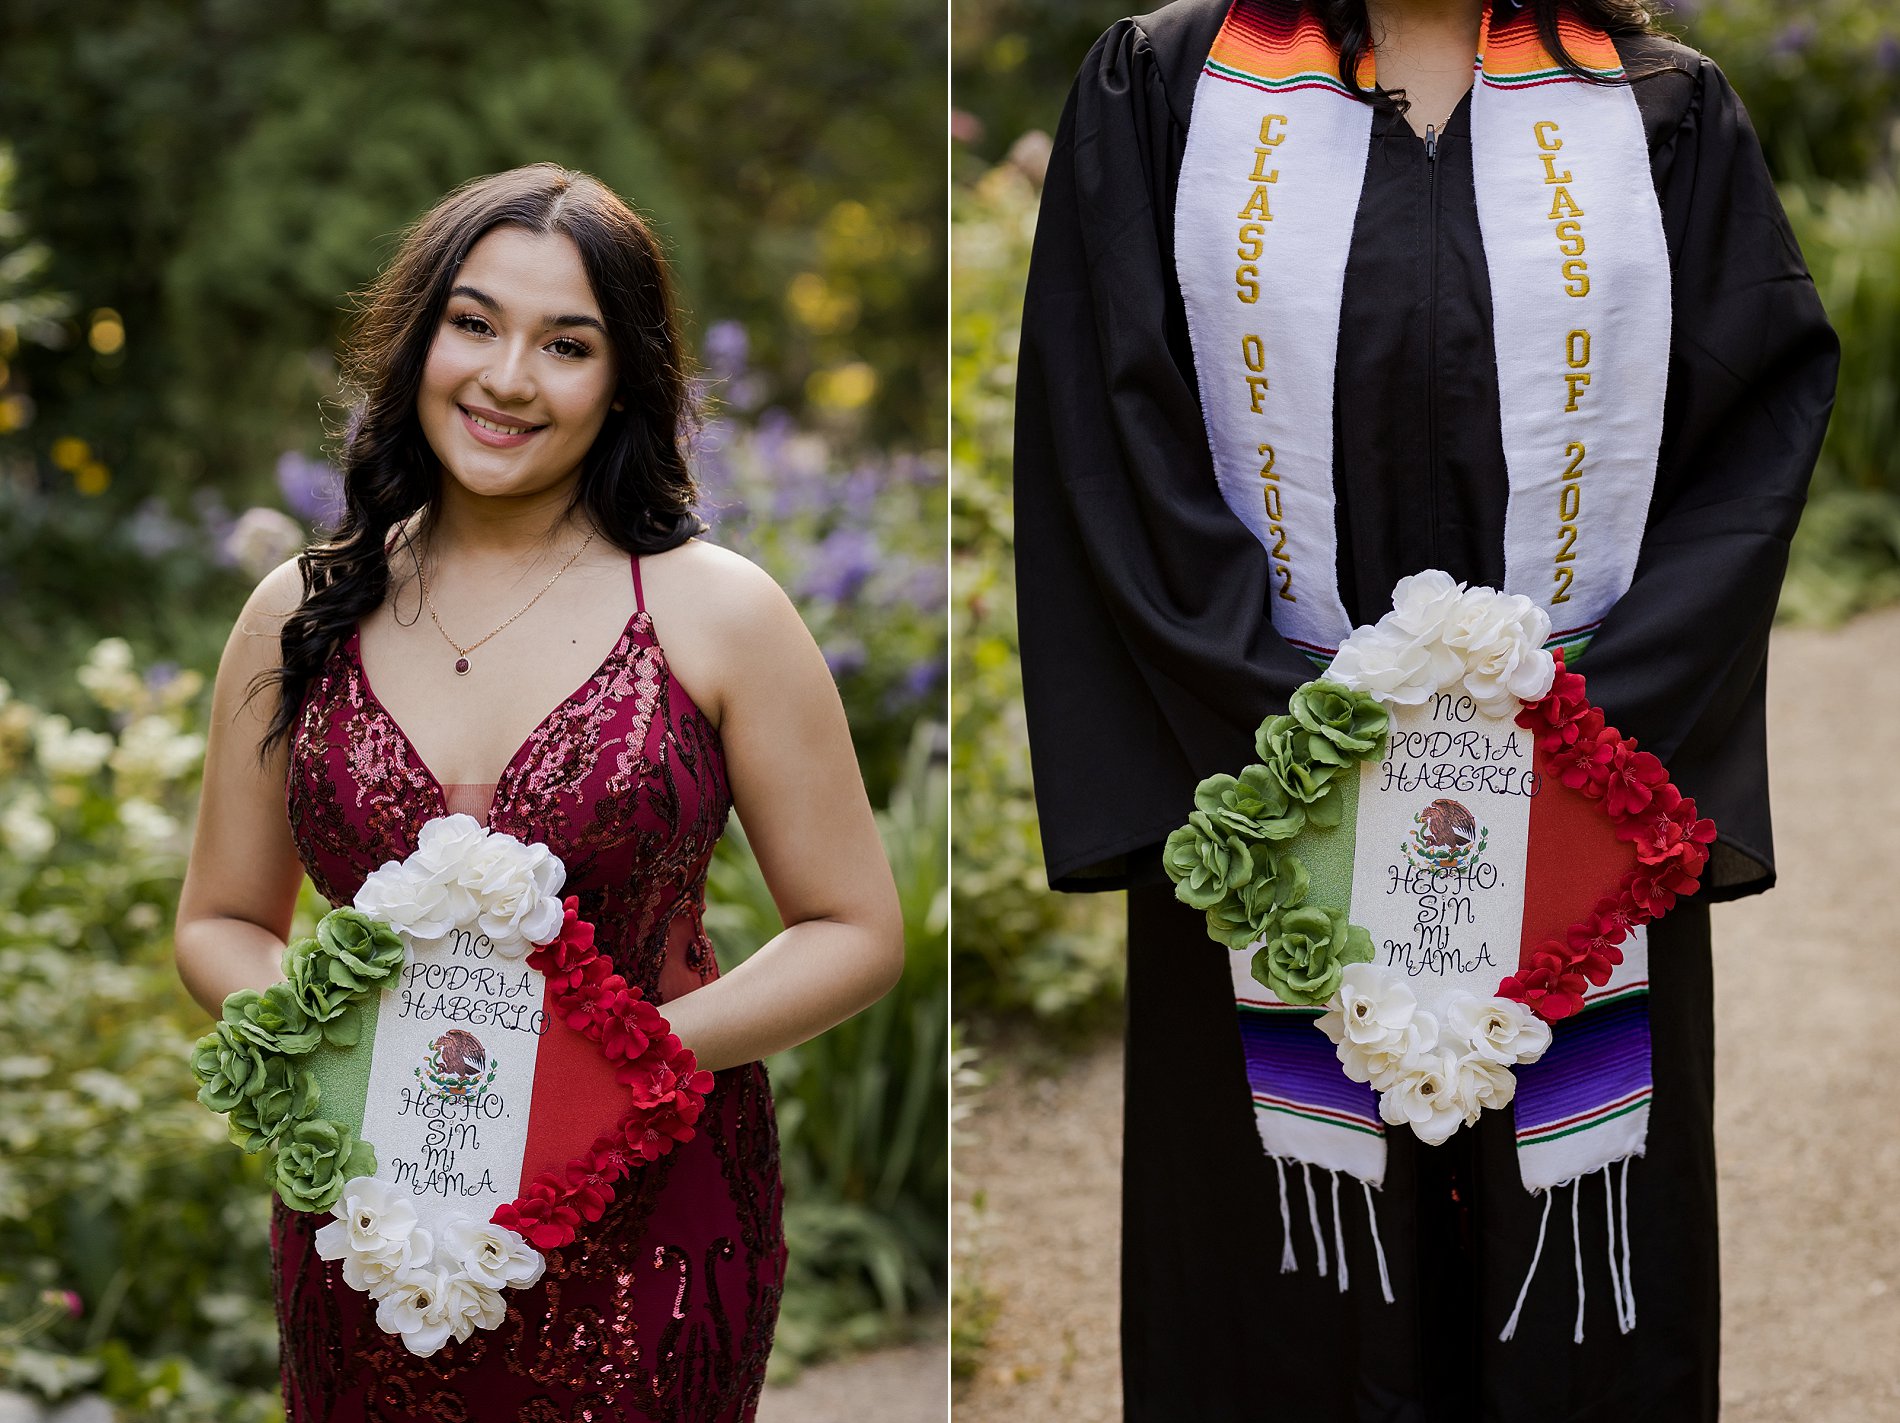 High school grad celebrating her Mexican heritage through her graduation portrait details.